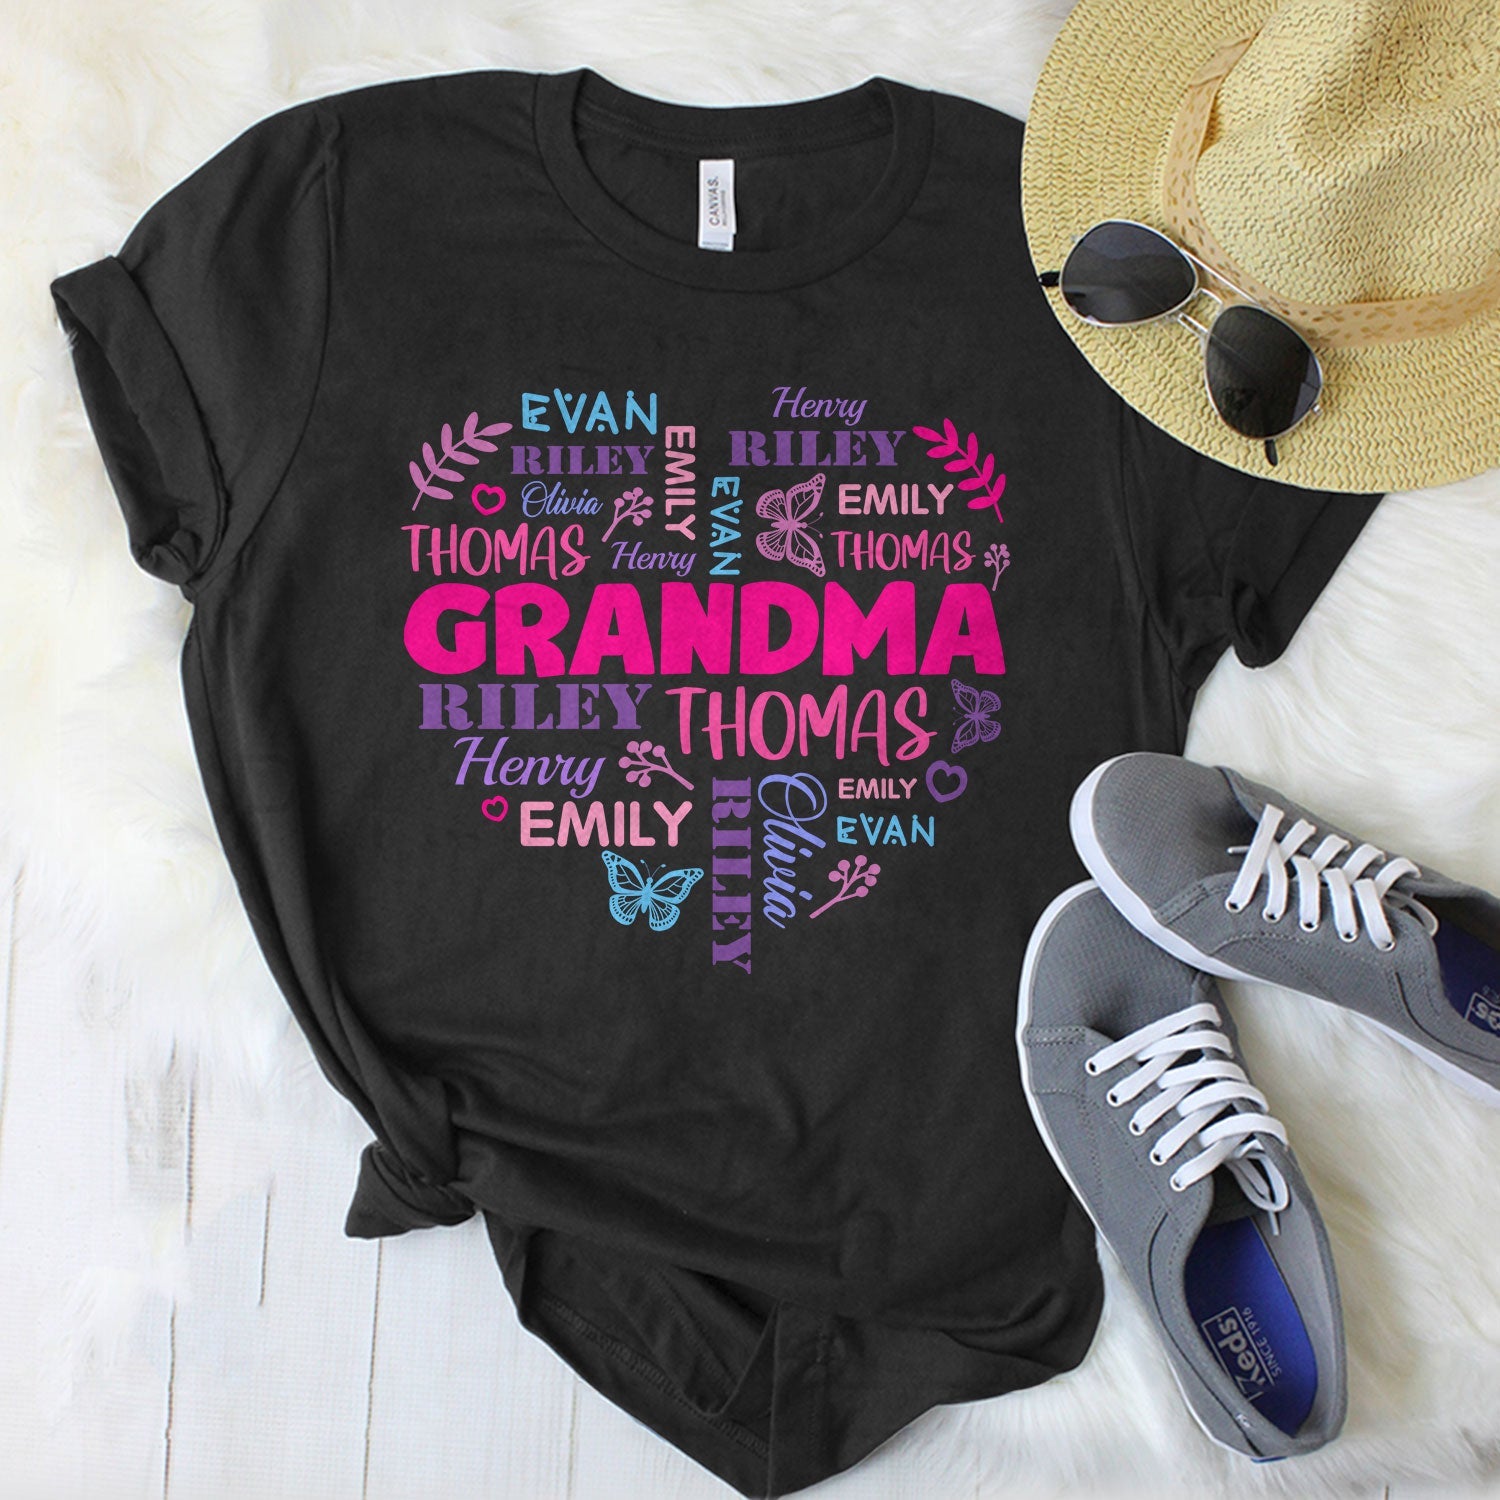 Grandma Word-Art Personalized Shirt